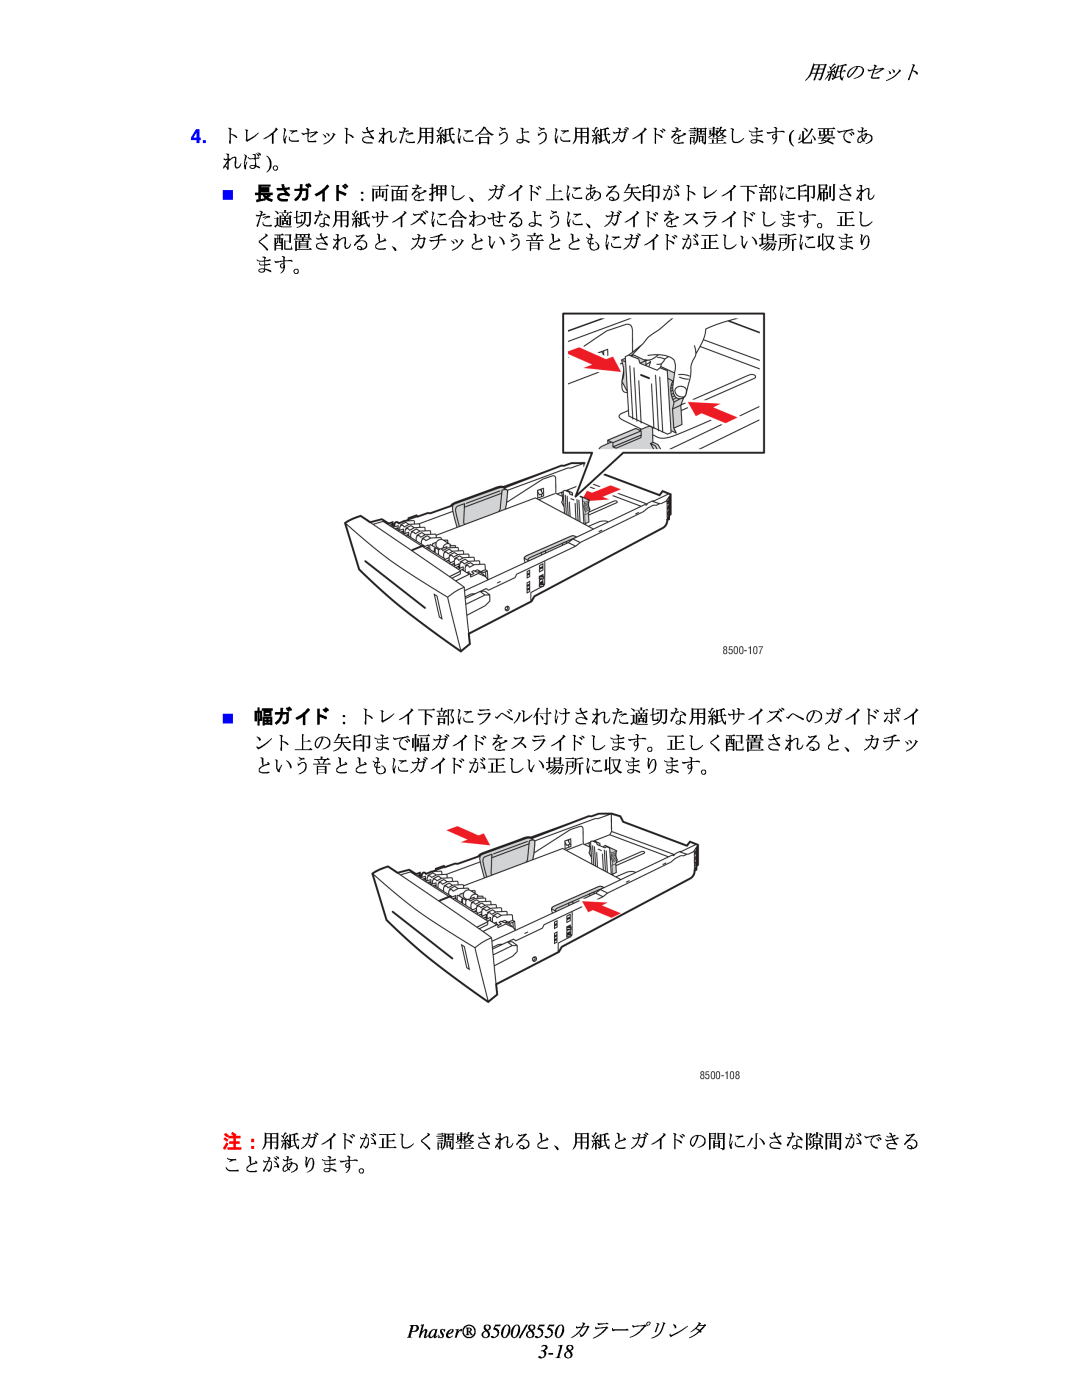 Xerox manual 用紙のセ ッ ト, Phaser 8500/8550 カ ラープ リ ン タ 3-18 